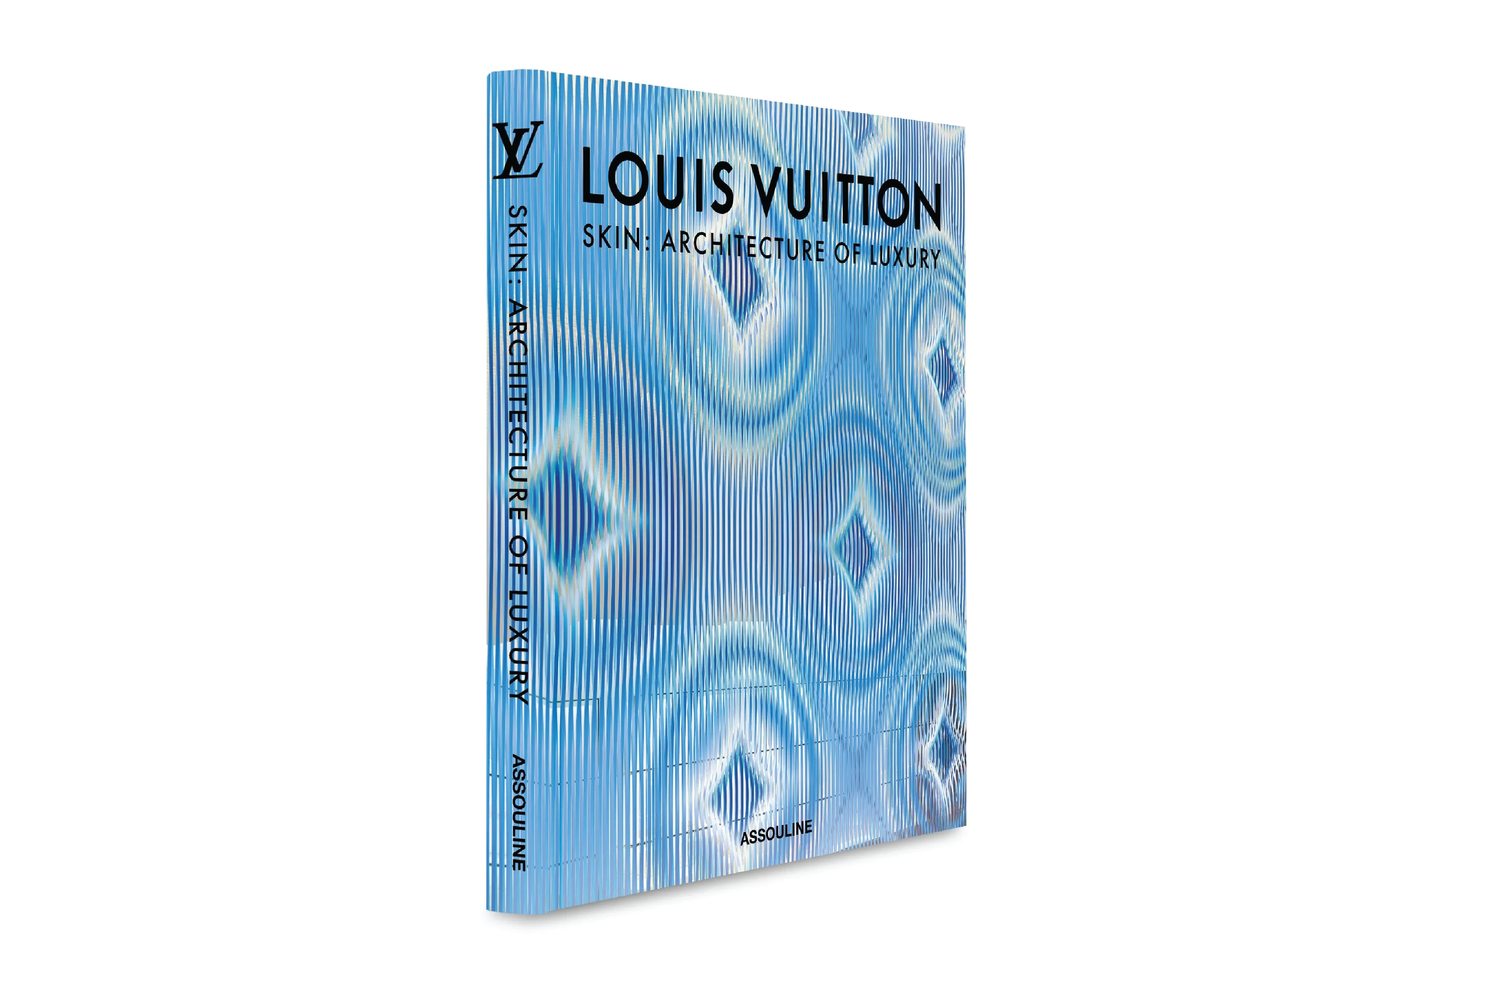 ASSOULINE Louis Vuitton Manufactures – Wynn at Home